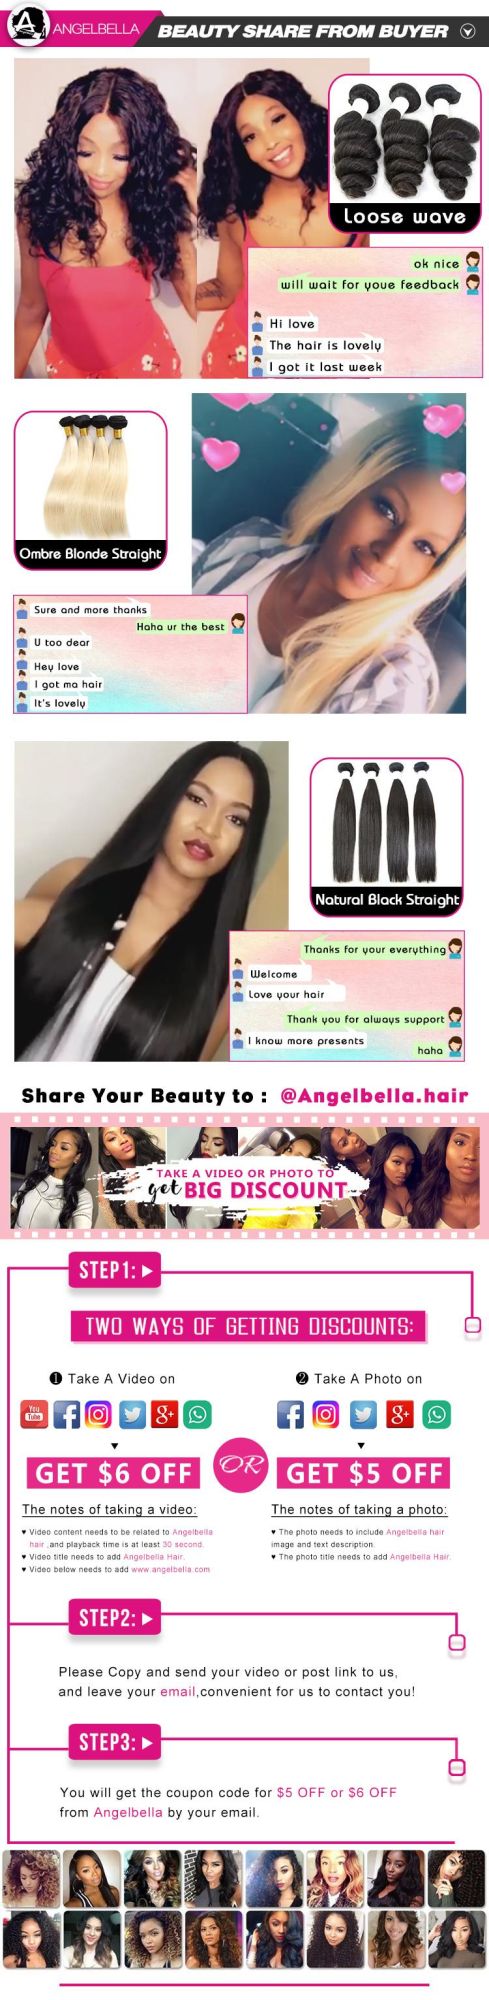 Angelbella Top Quality Brazilian Remy Hair Weave Bundles Cheap Human Virgin Hair Weft